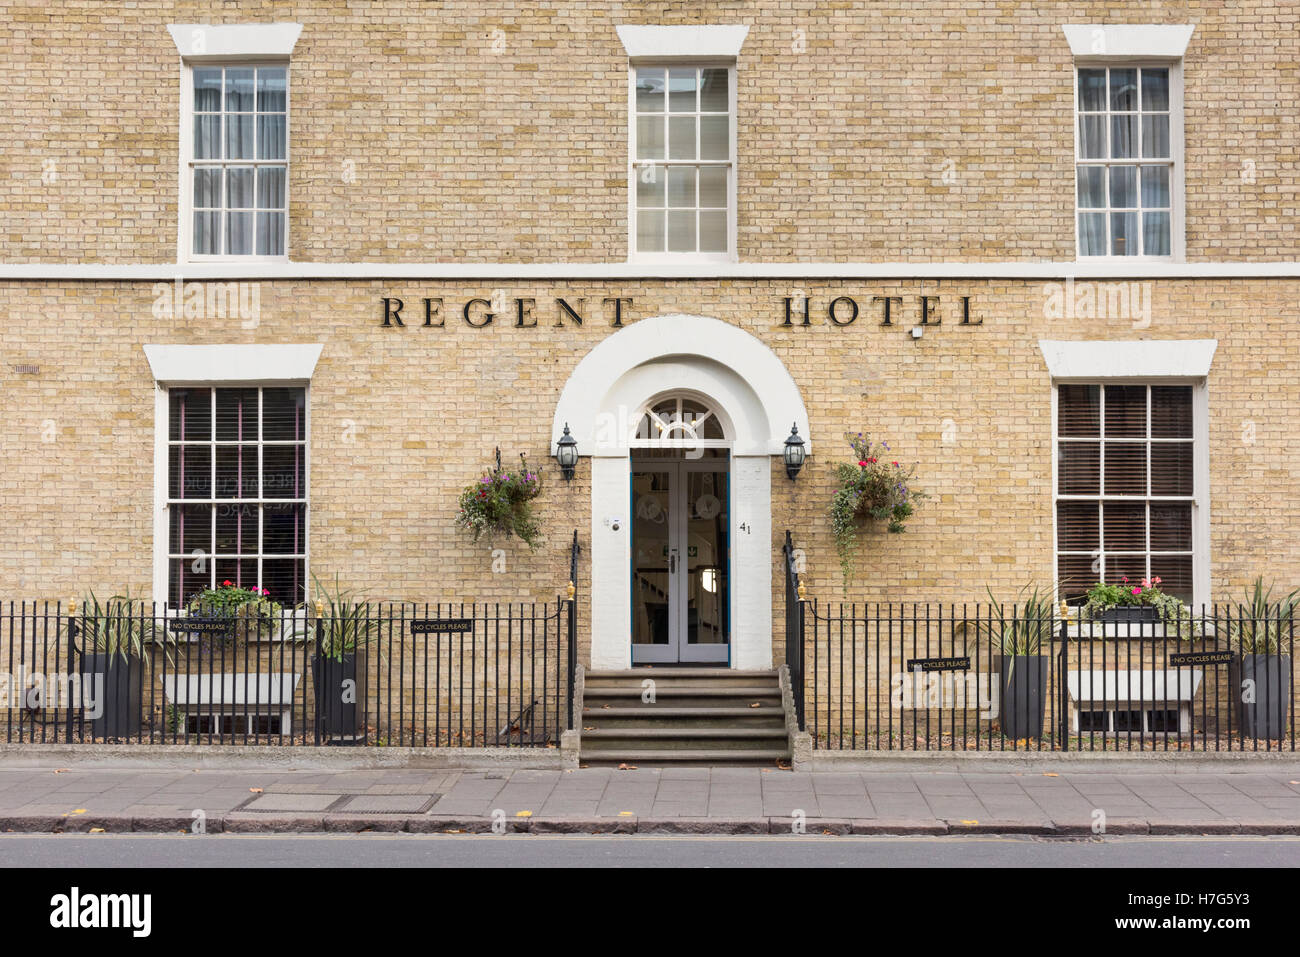 The Regent Hotel, Regent Street Cambridge UK Stock Photo